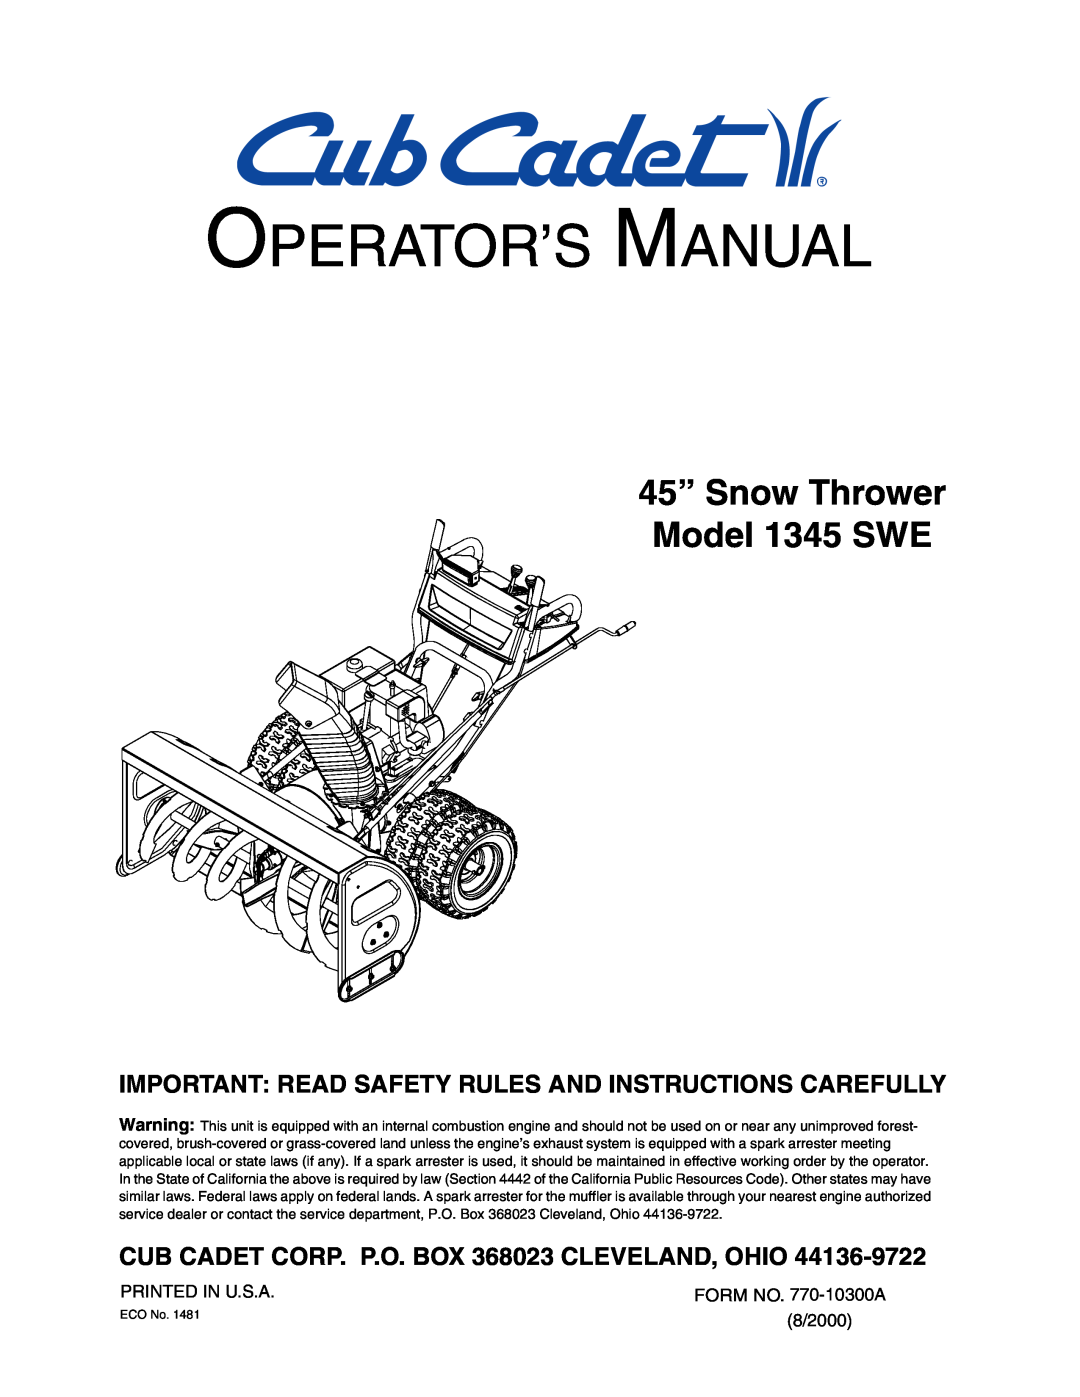 Cub Cadet manual Operator’S Manual, 45” Snow Thrower Model 1345 SWE, CUB CADET CORP. P.O. BOX 368023 CLEVELAND, OHIO 